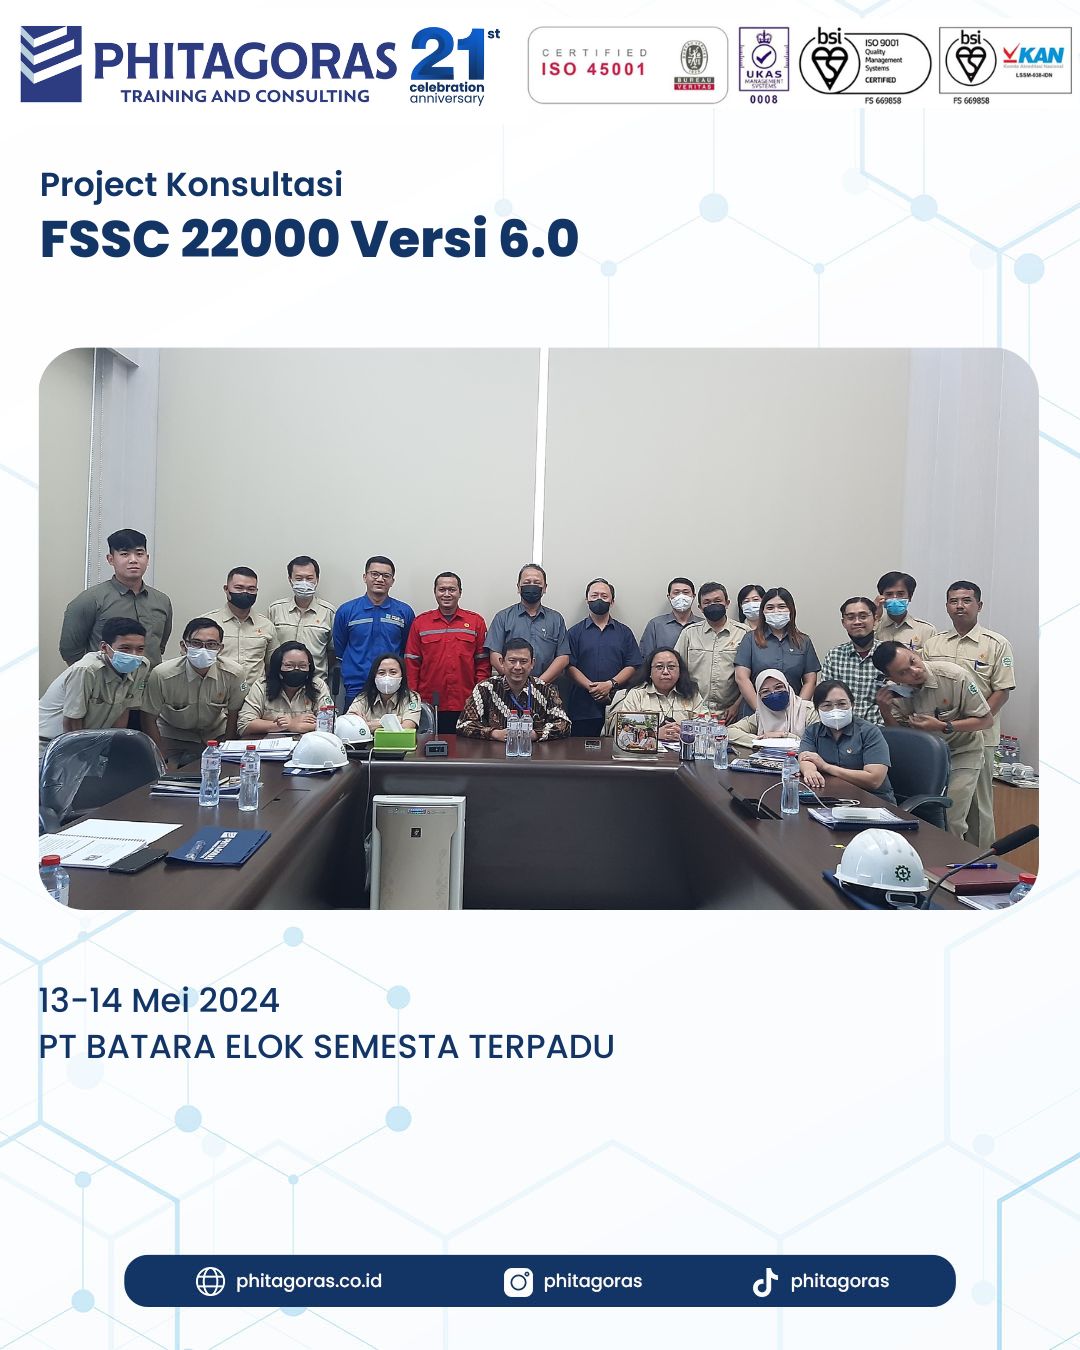 Project Konsultasi FSSC 22000 Versi 6.0 - PT BATARA ELOK SEMESTA TERPADU